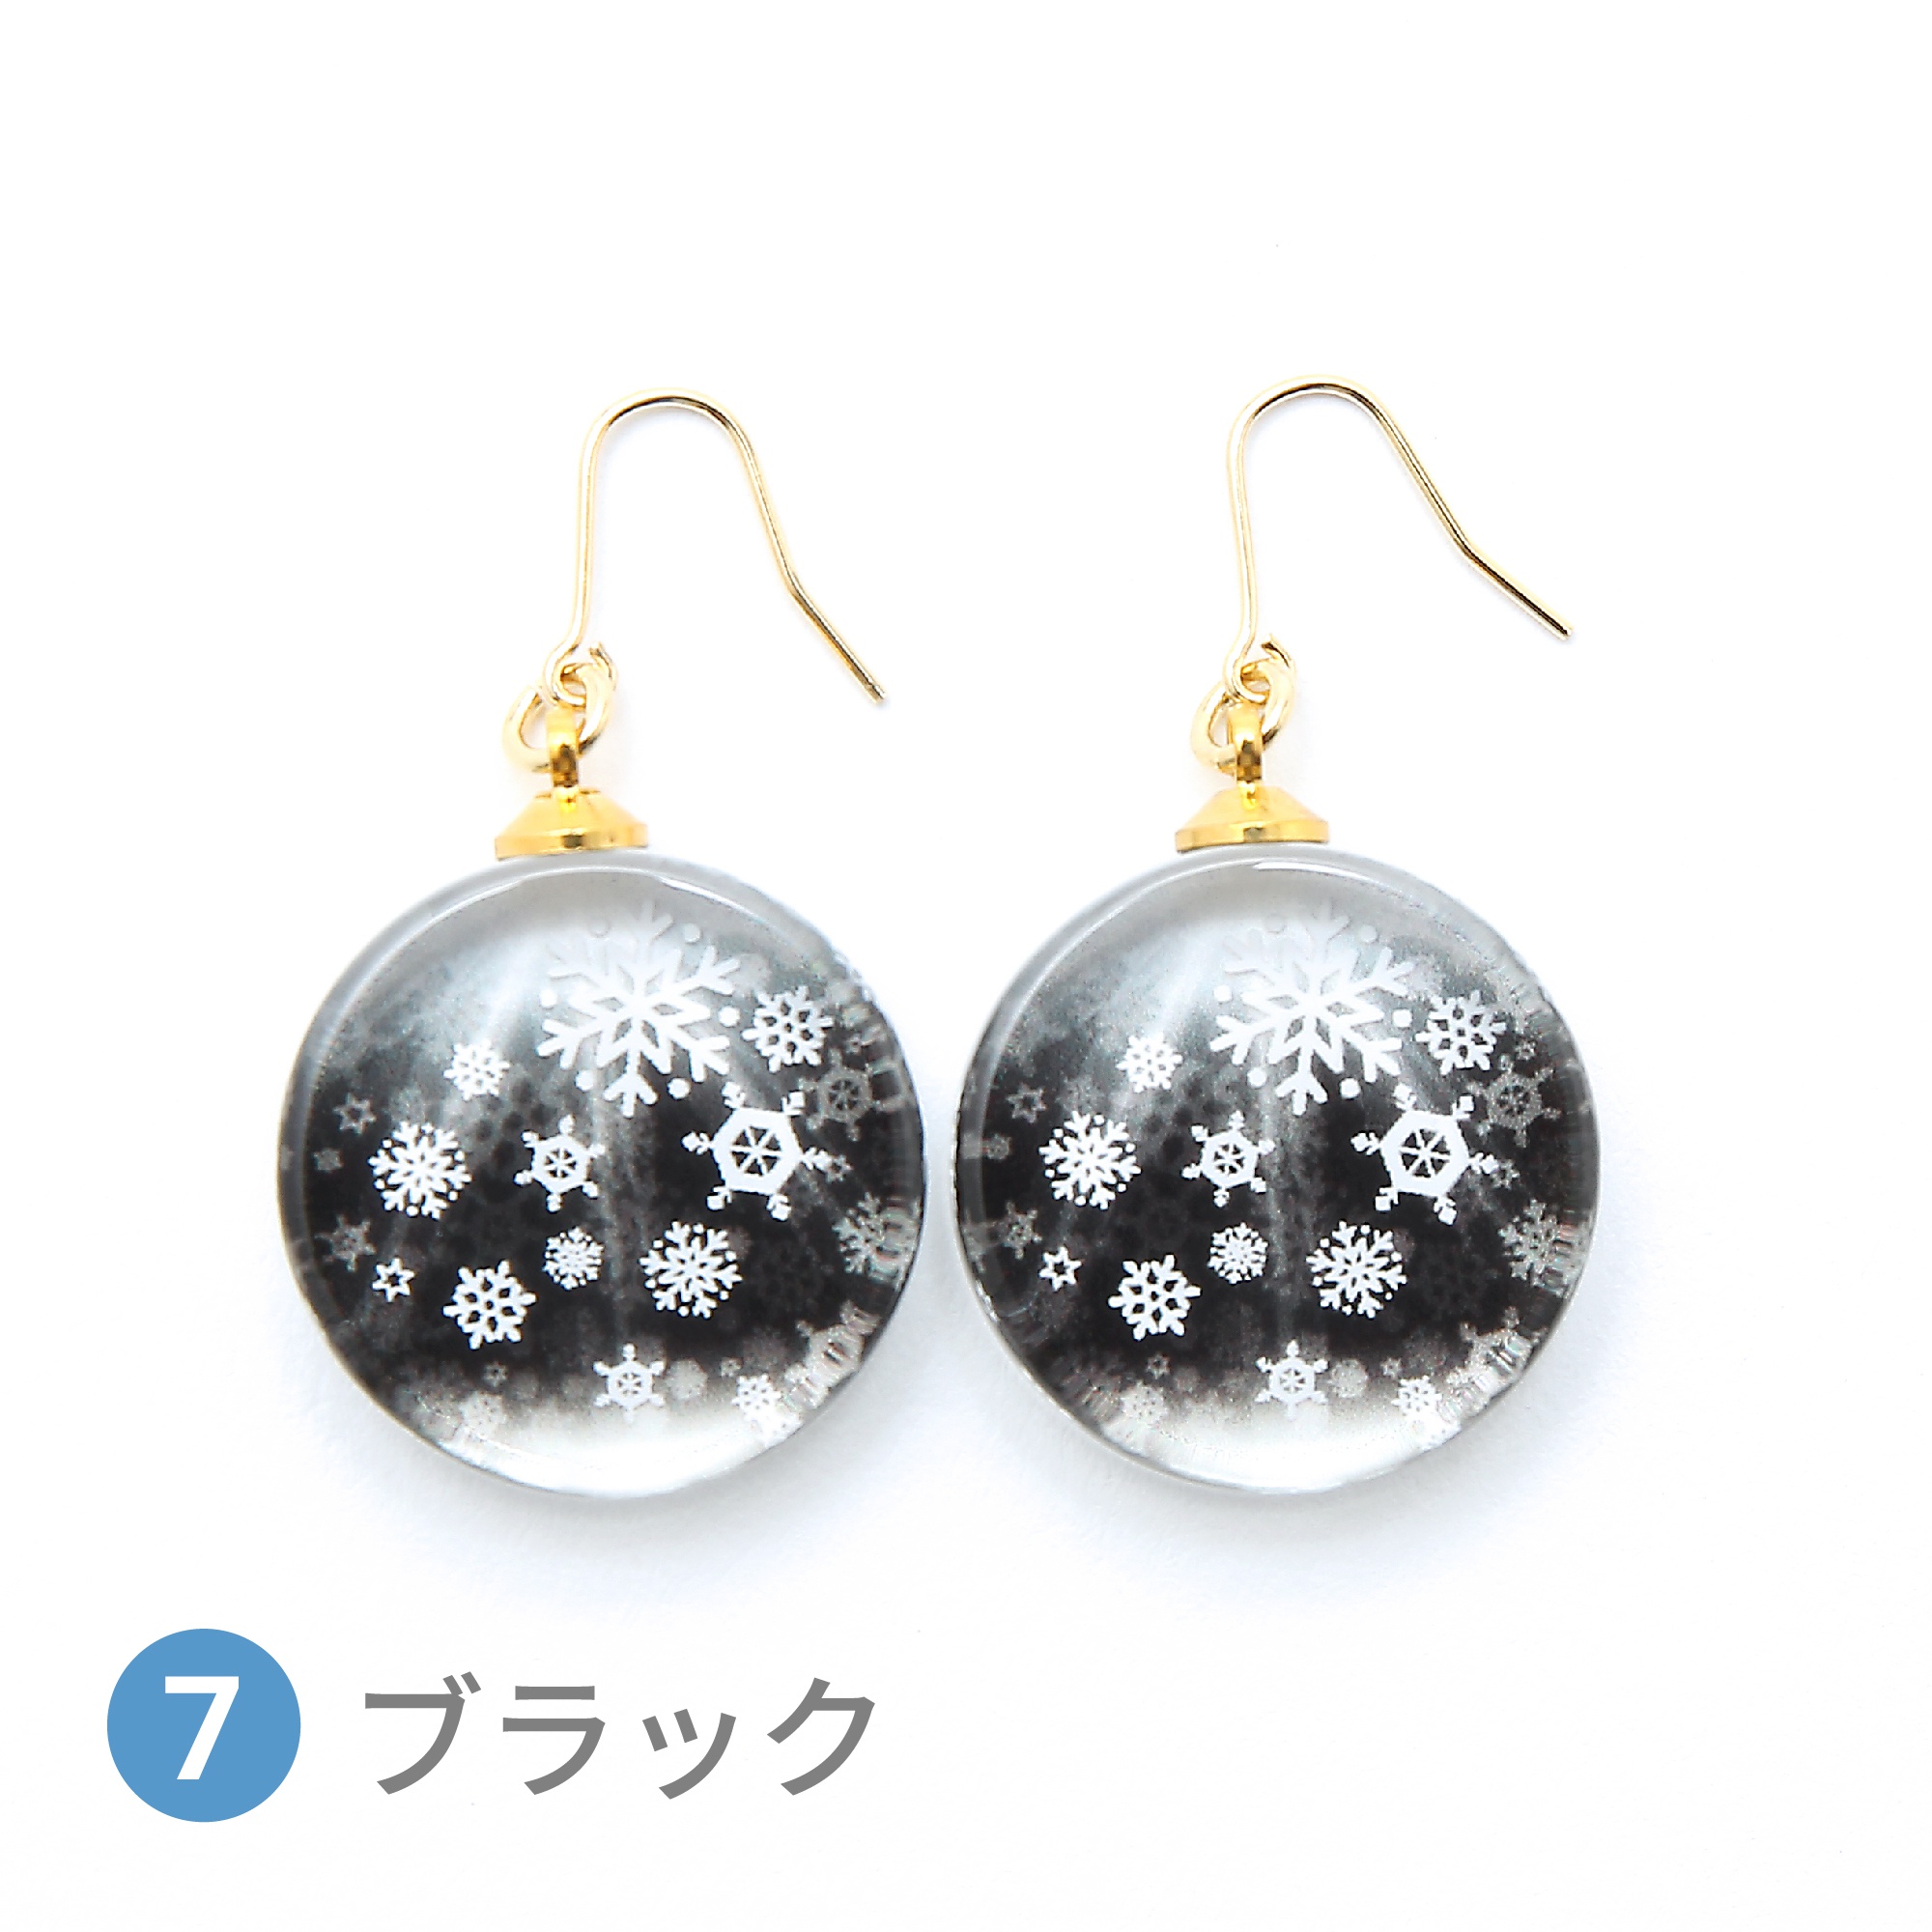 Glass accessories Pierced Earring Shiny winter black round shape